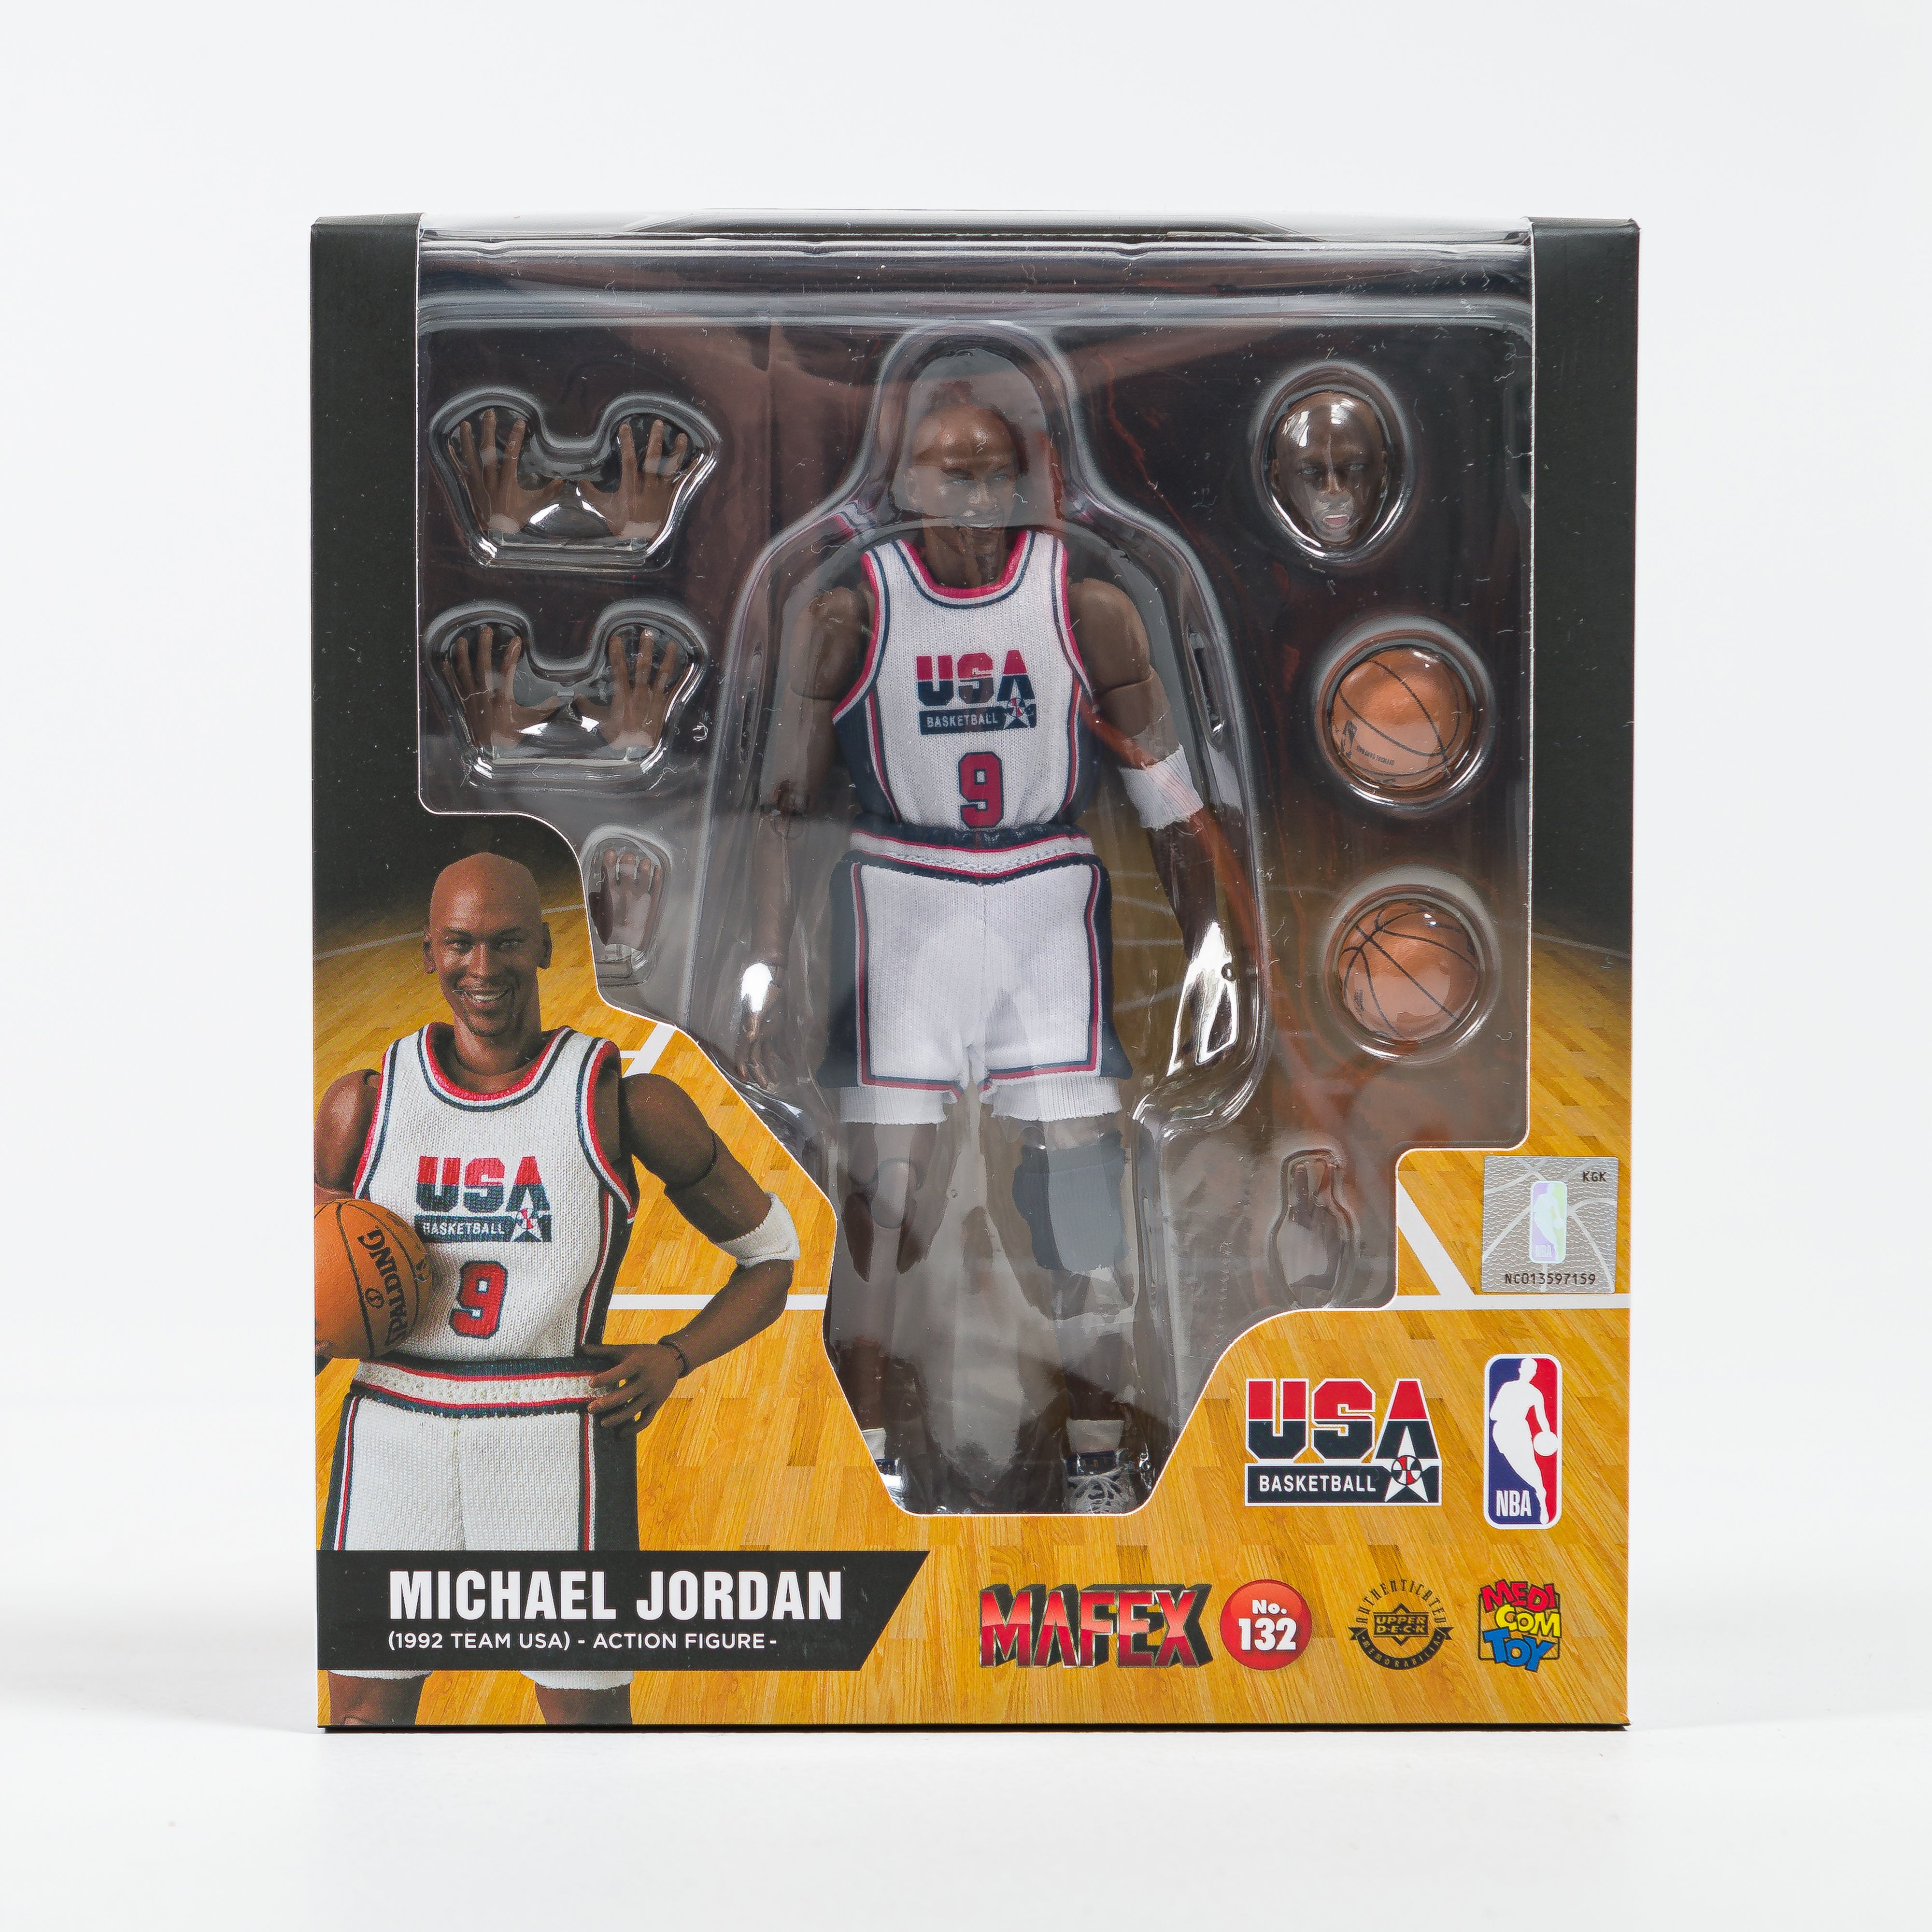 Medicom Toy Mafex Michael Jordan - 1992 USA | Up There